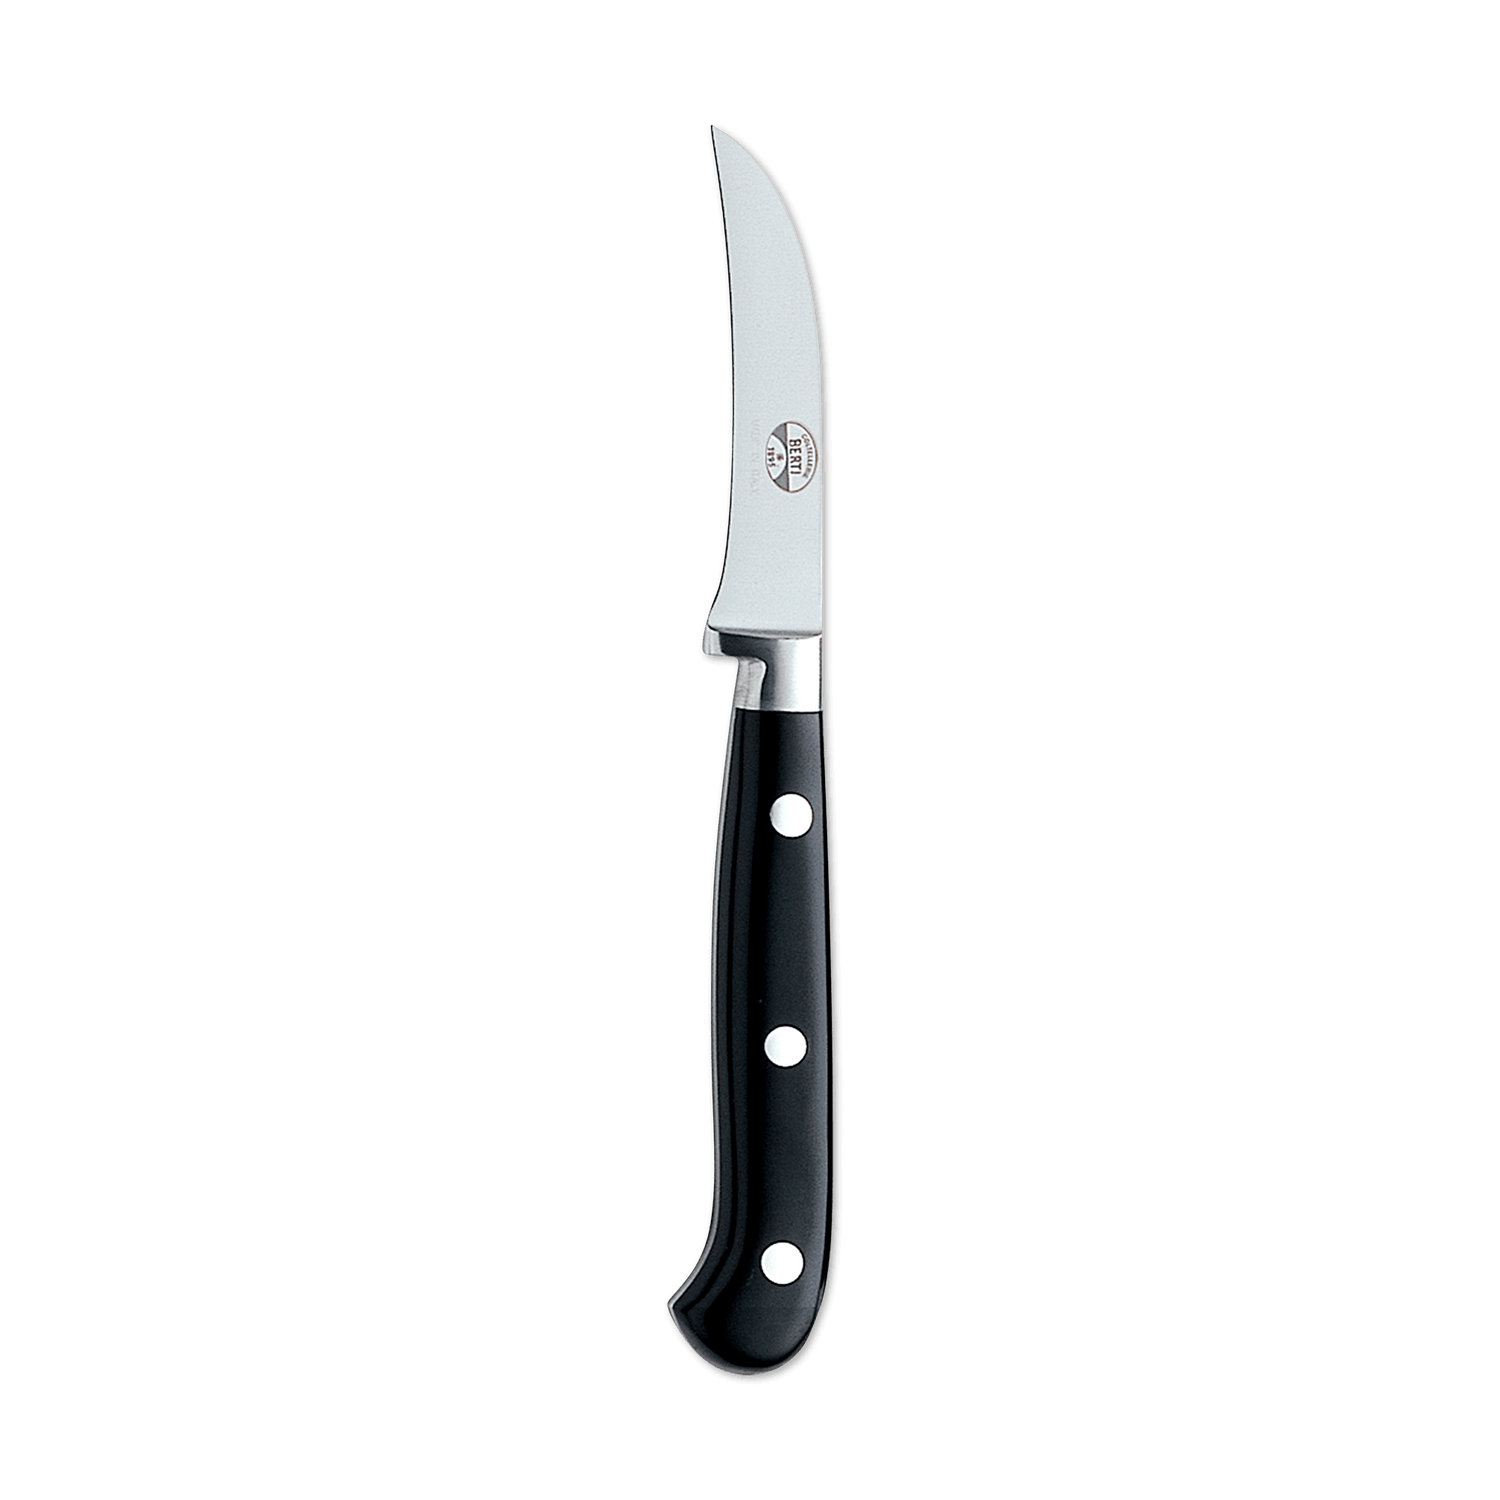 Master Grade 5093 I.O. Shen Curved Paring Knife - 3.5 in. & 90 mm